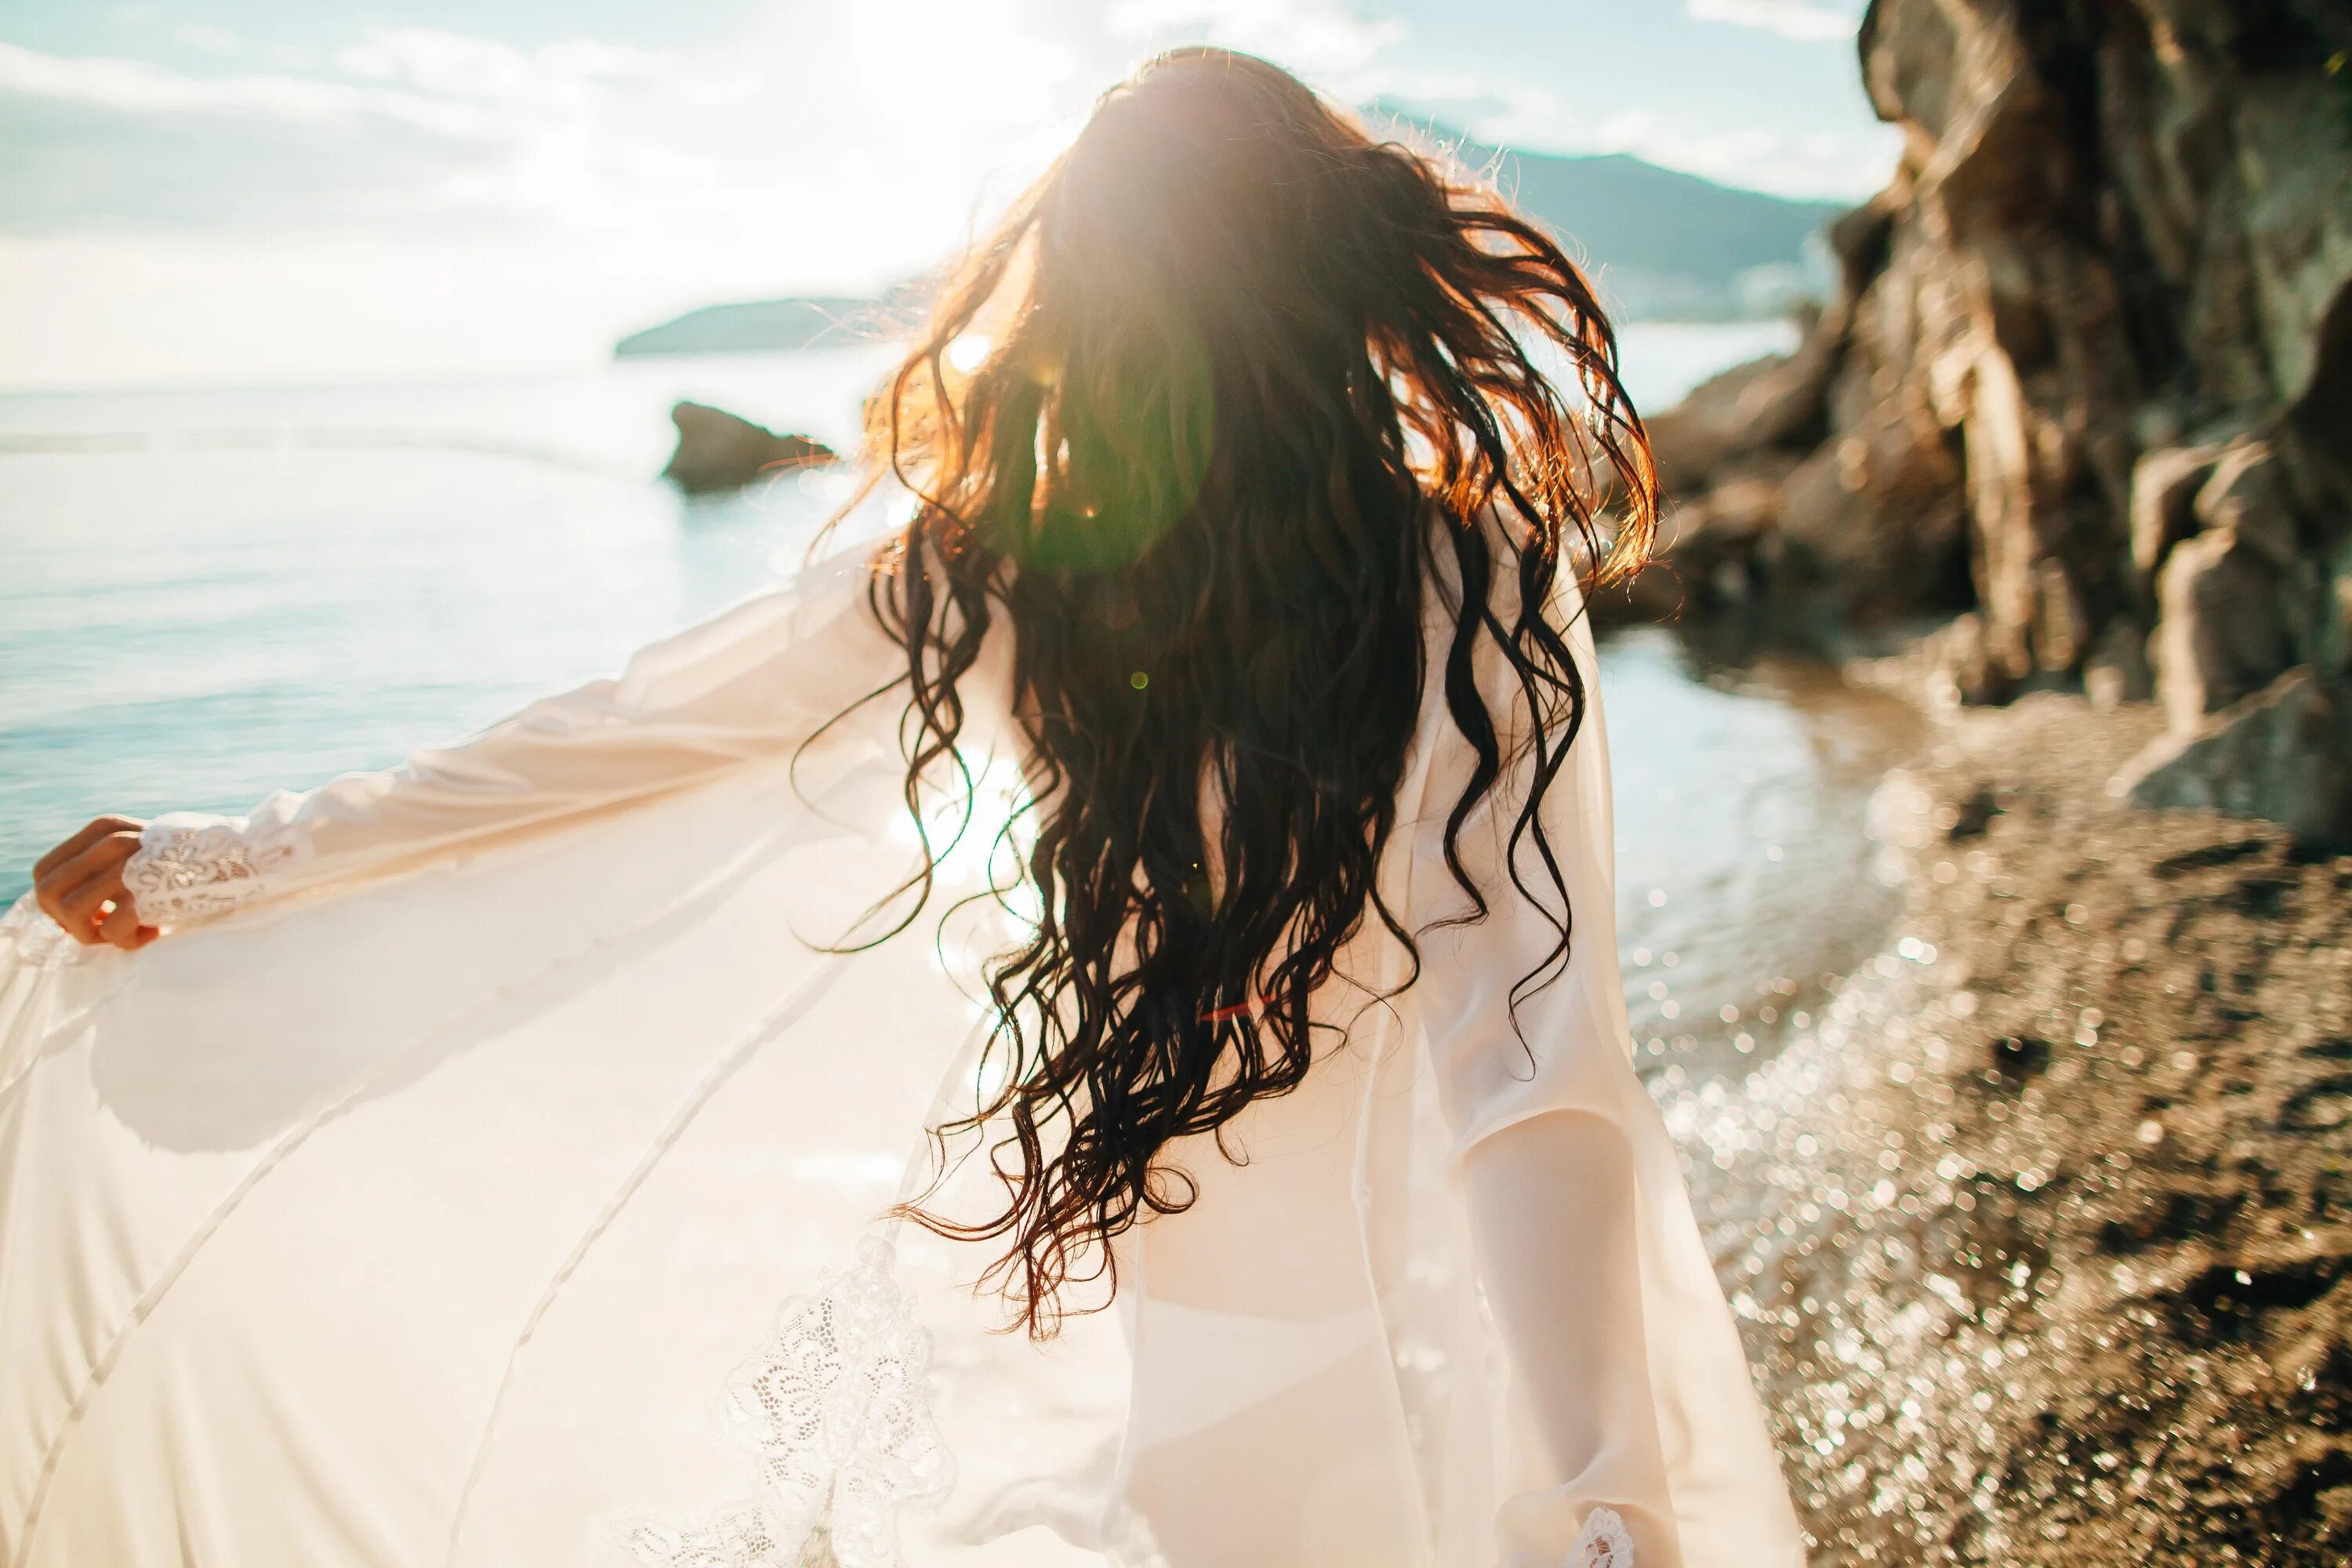 4 hairy. Девушка с длинными волосами на море. Фотосессия на море. Волосы на ветру. Девушка на берегу моря.